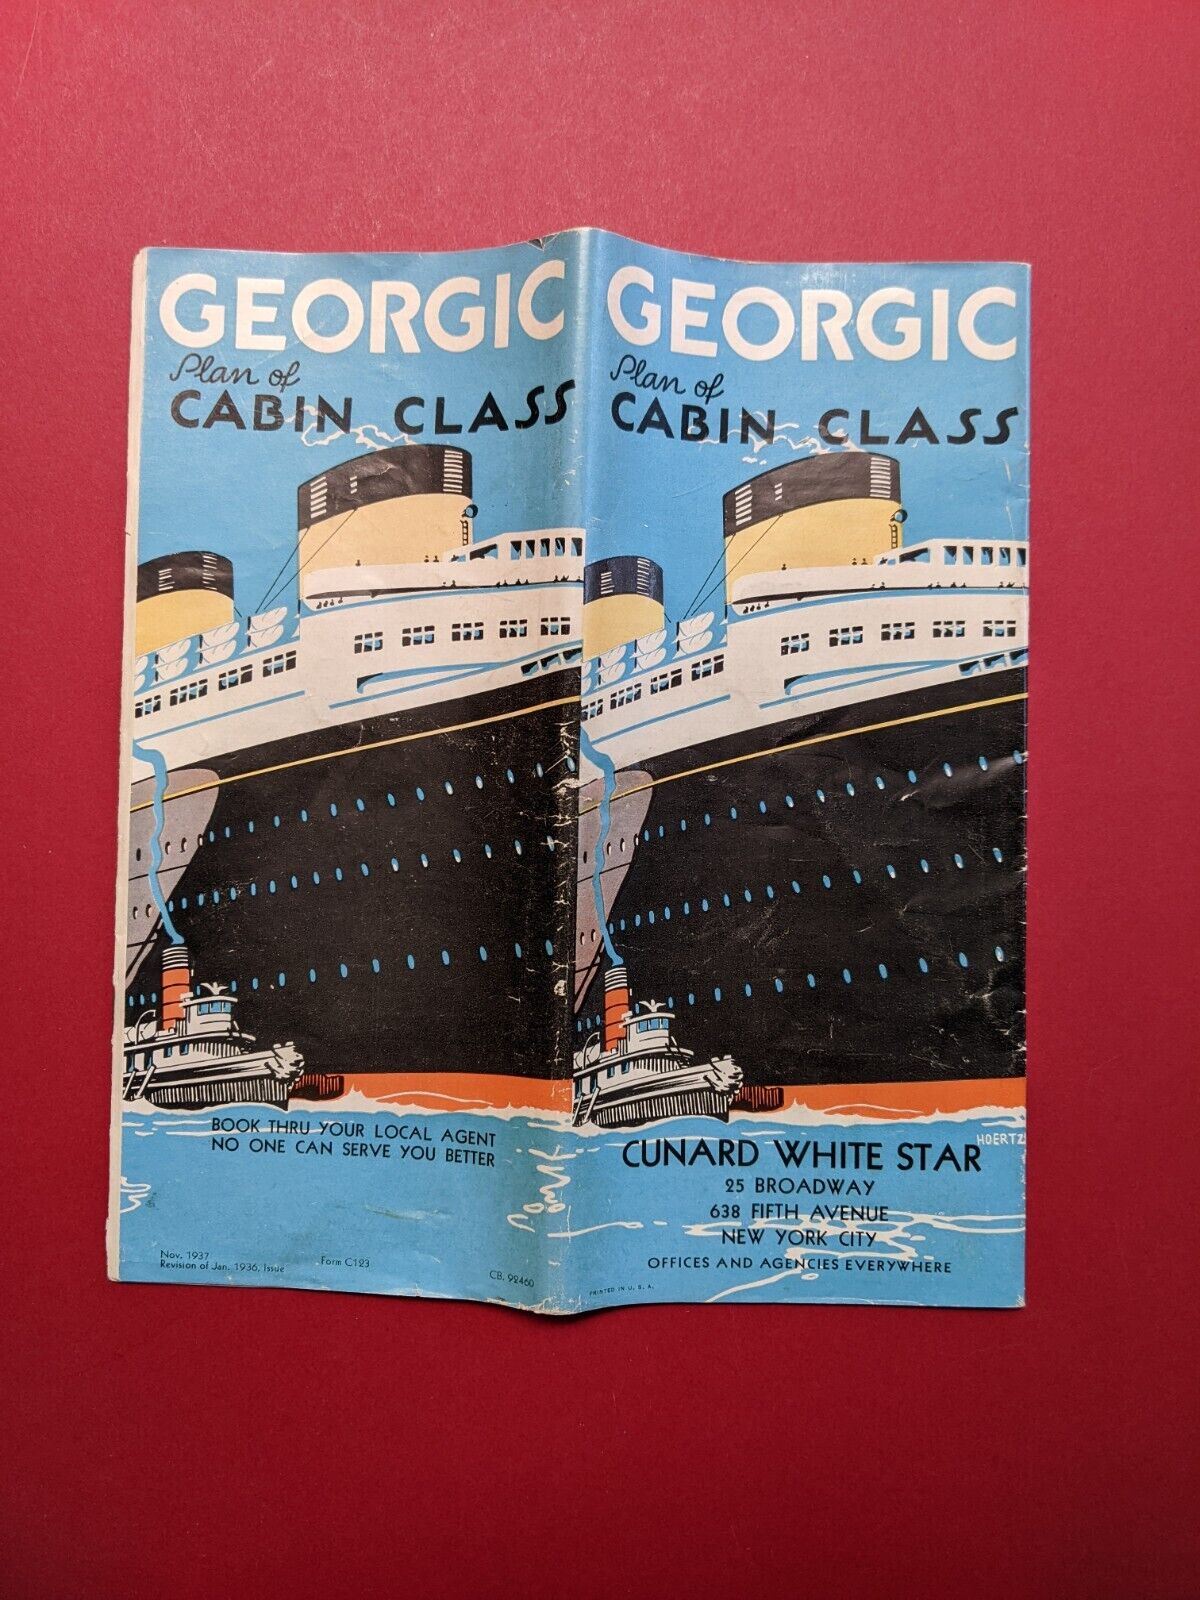 Cunard White Star Line - Motor Vessel GEORGIC (1932) Deck Plan (November, 1937)